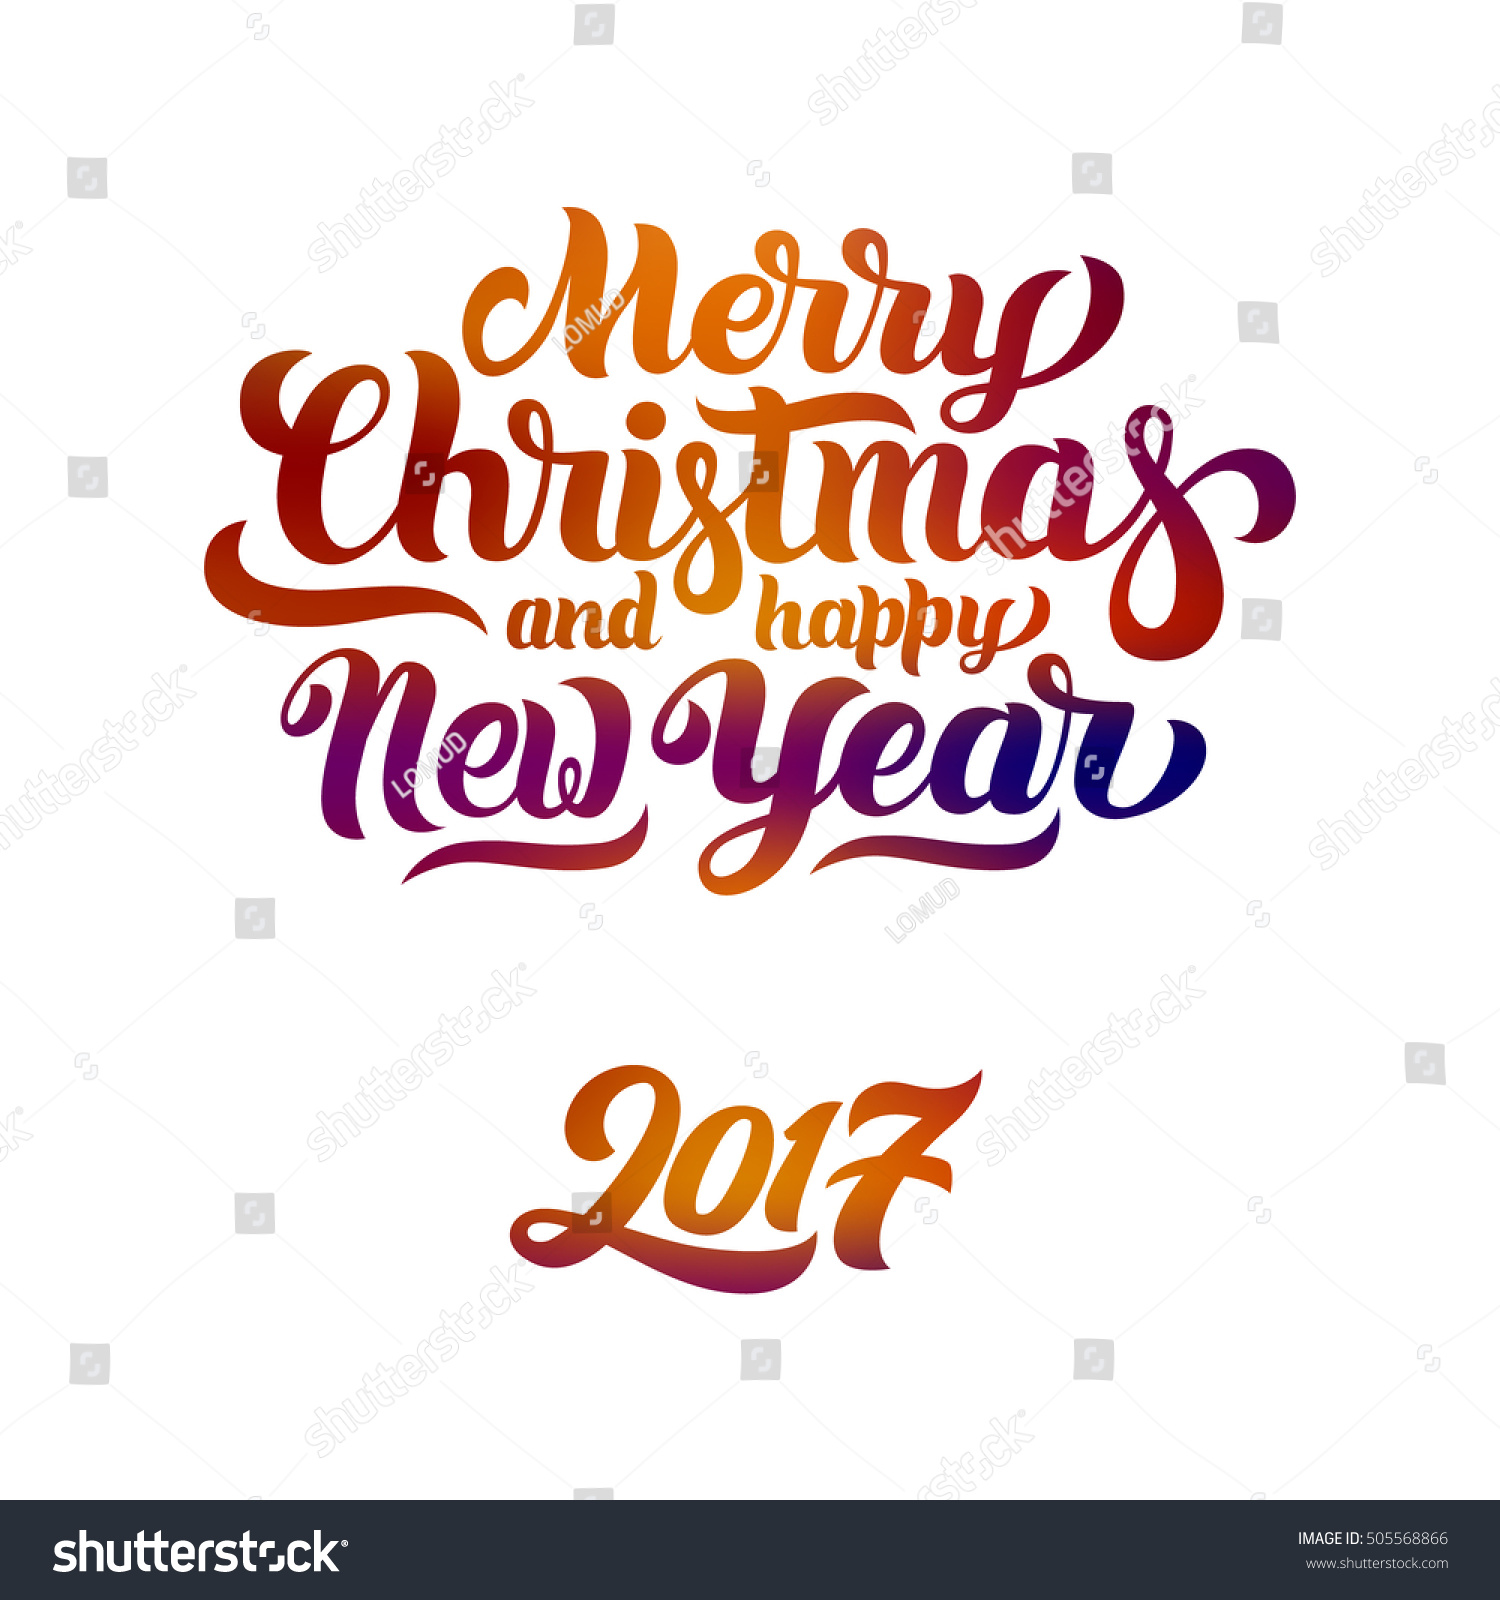 Merry Christmas Happy New Year 2017 Stock Vector 505568866 - Shutterstock